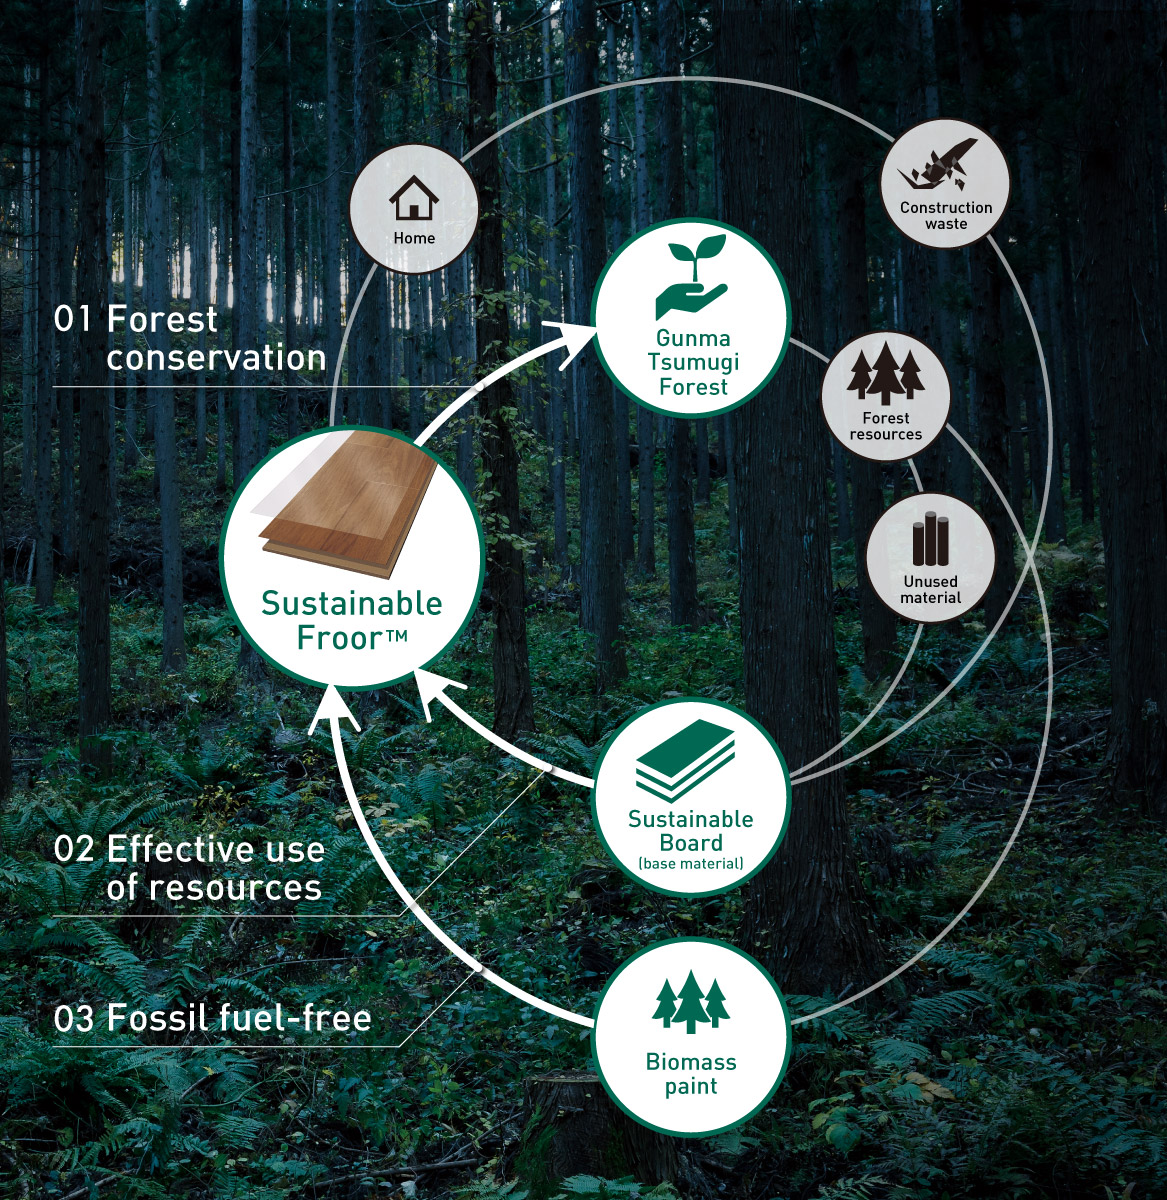 Illustration: Sustainable Floor™ tree-planting activities